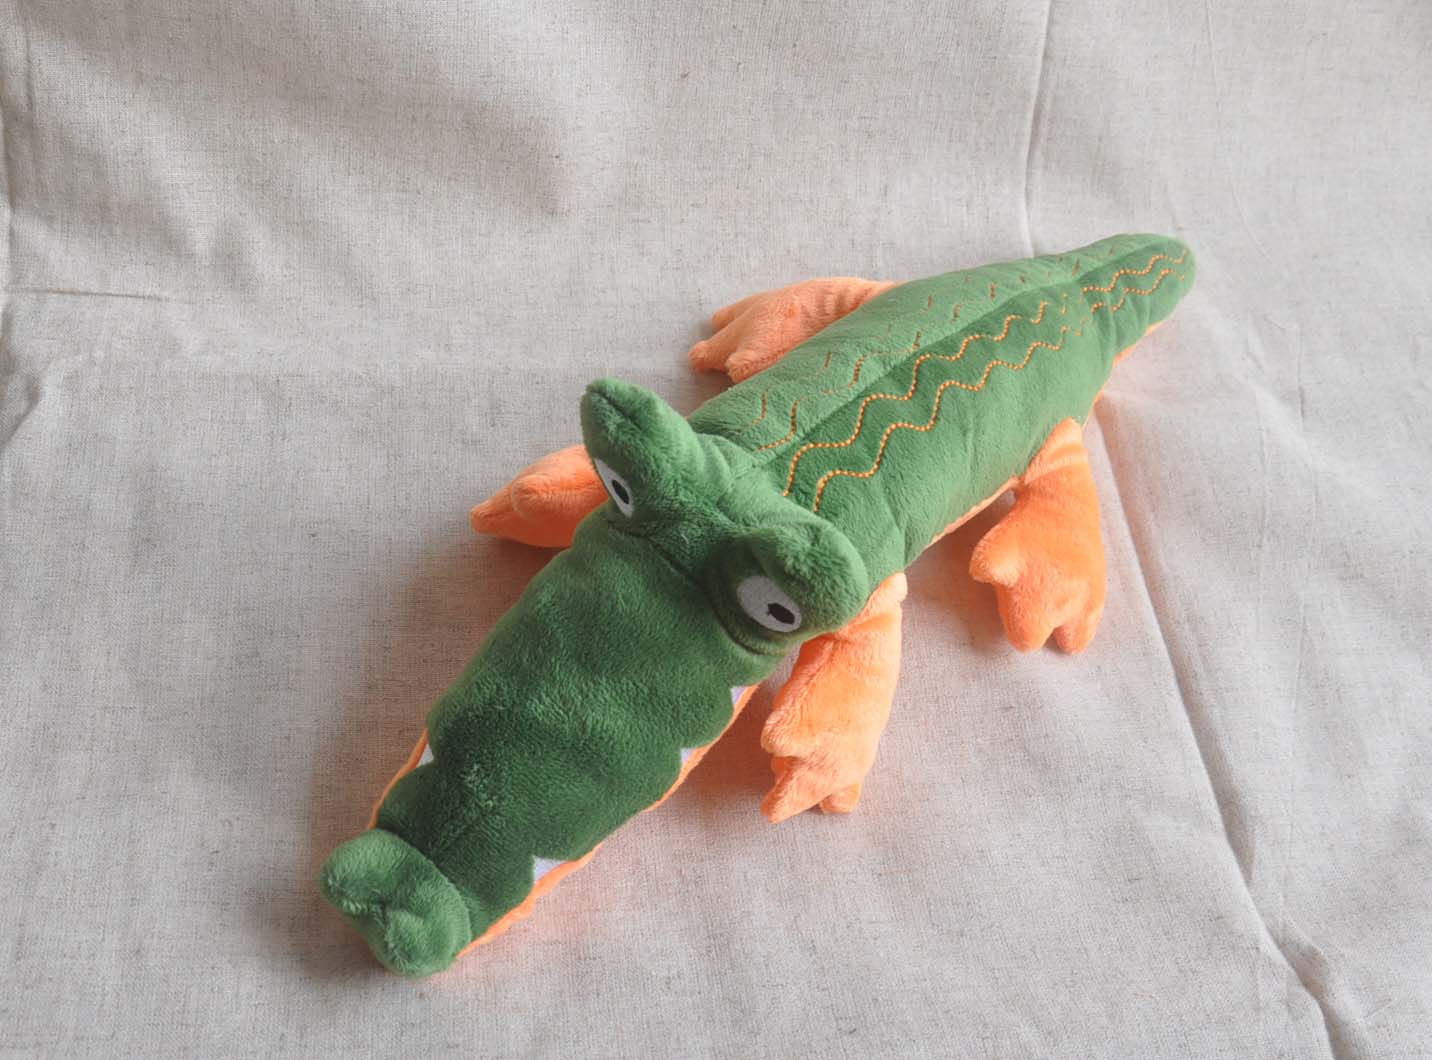 Chinese plush toy of green crocodile